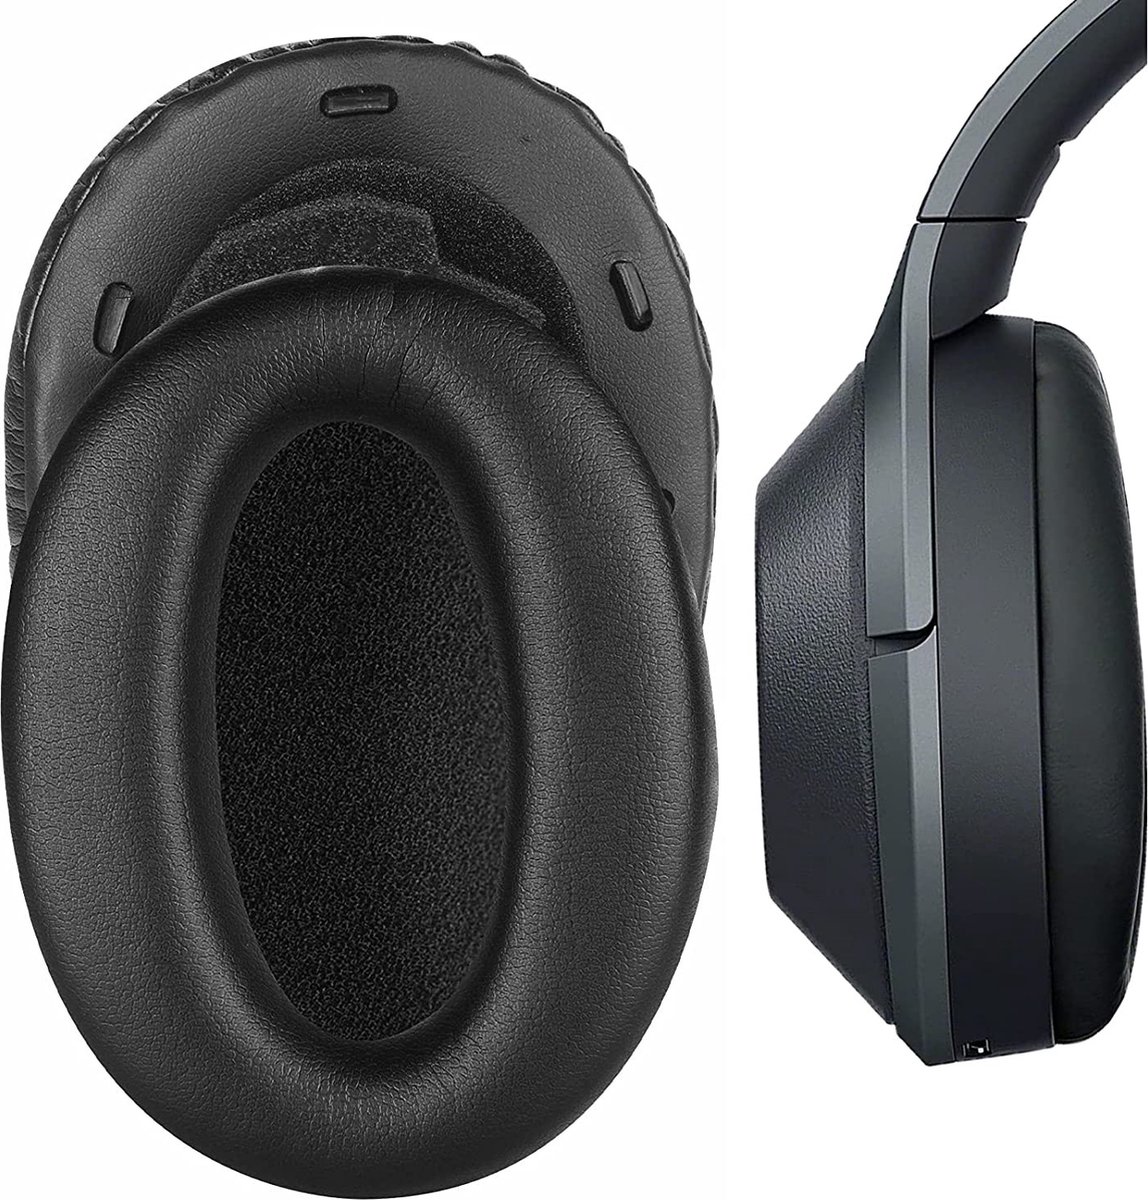 Sony Oorkussens - Complete Set Ear Pads met Memory Foam voor Sony MDR-1000X - Sony 1000 Ear Cushion Pads